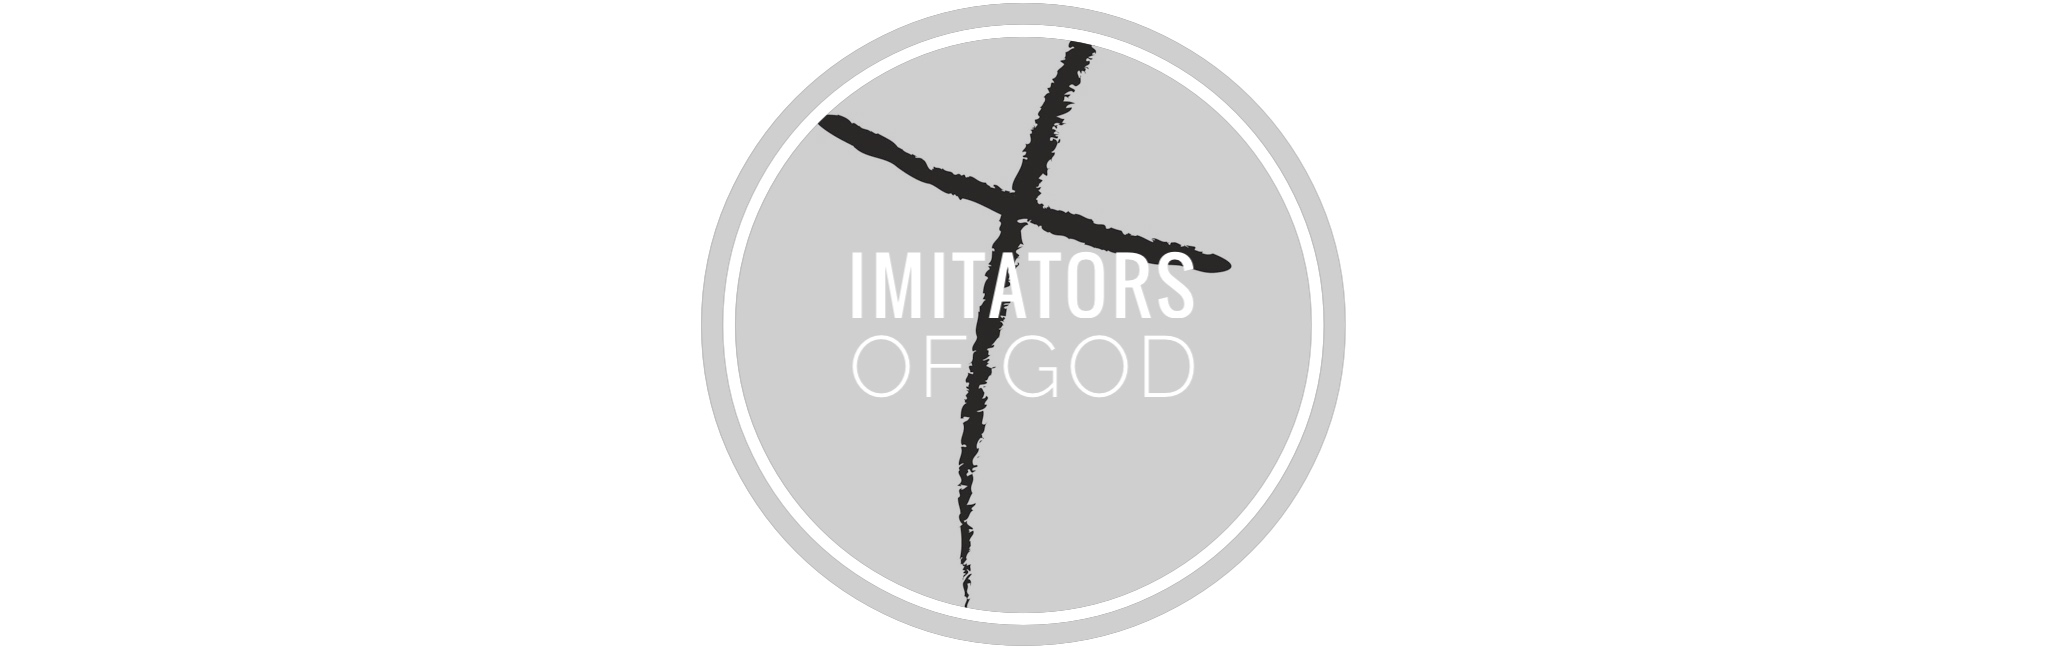 Imitators of God